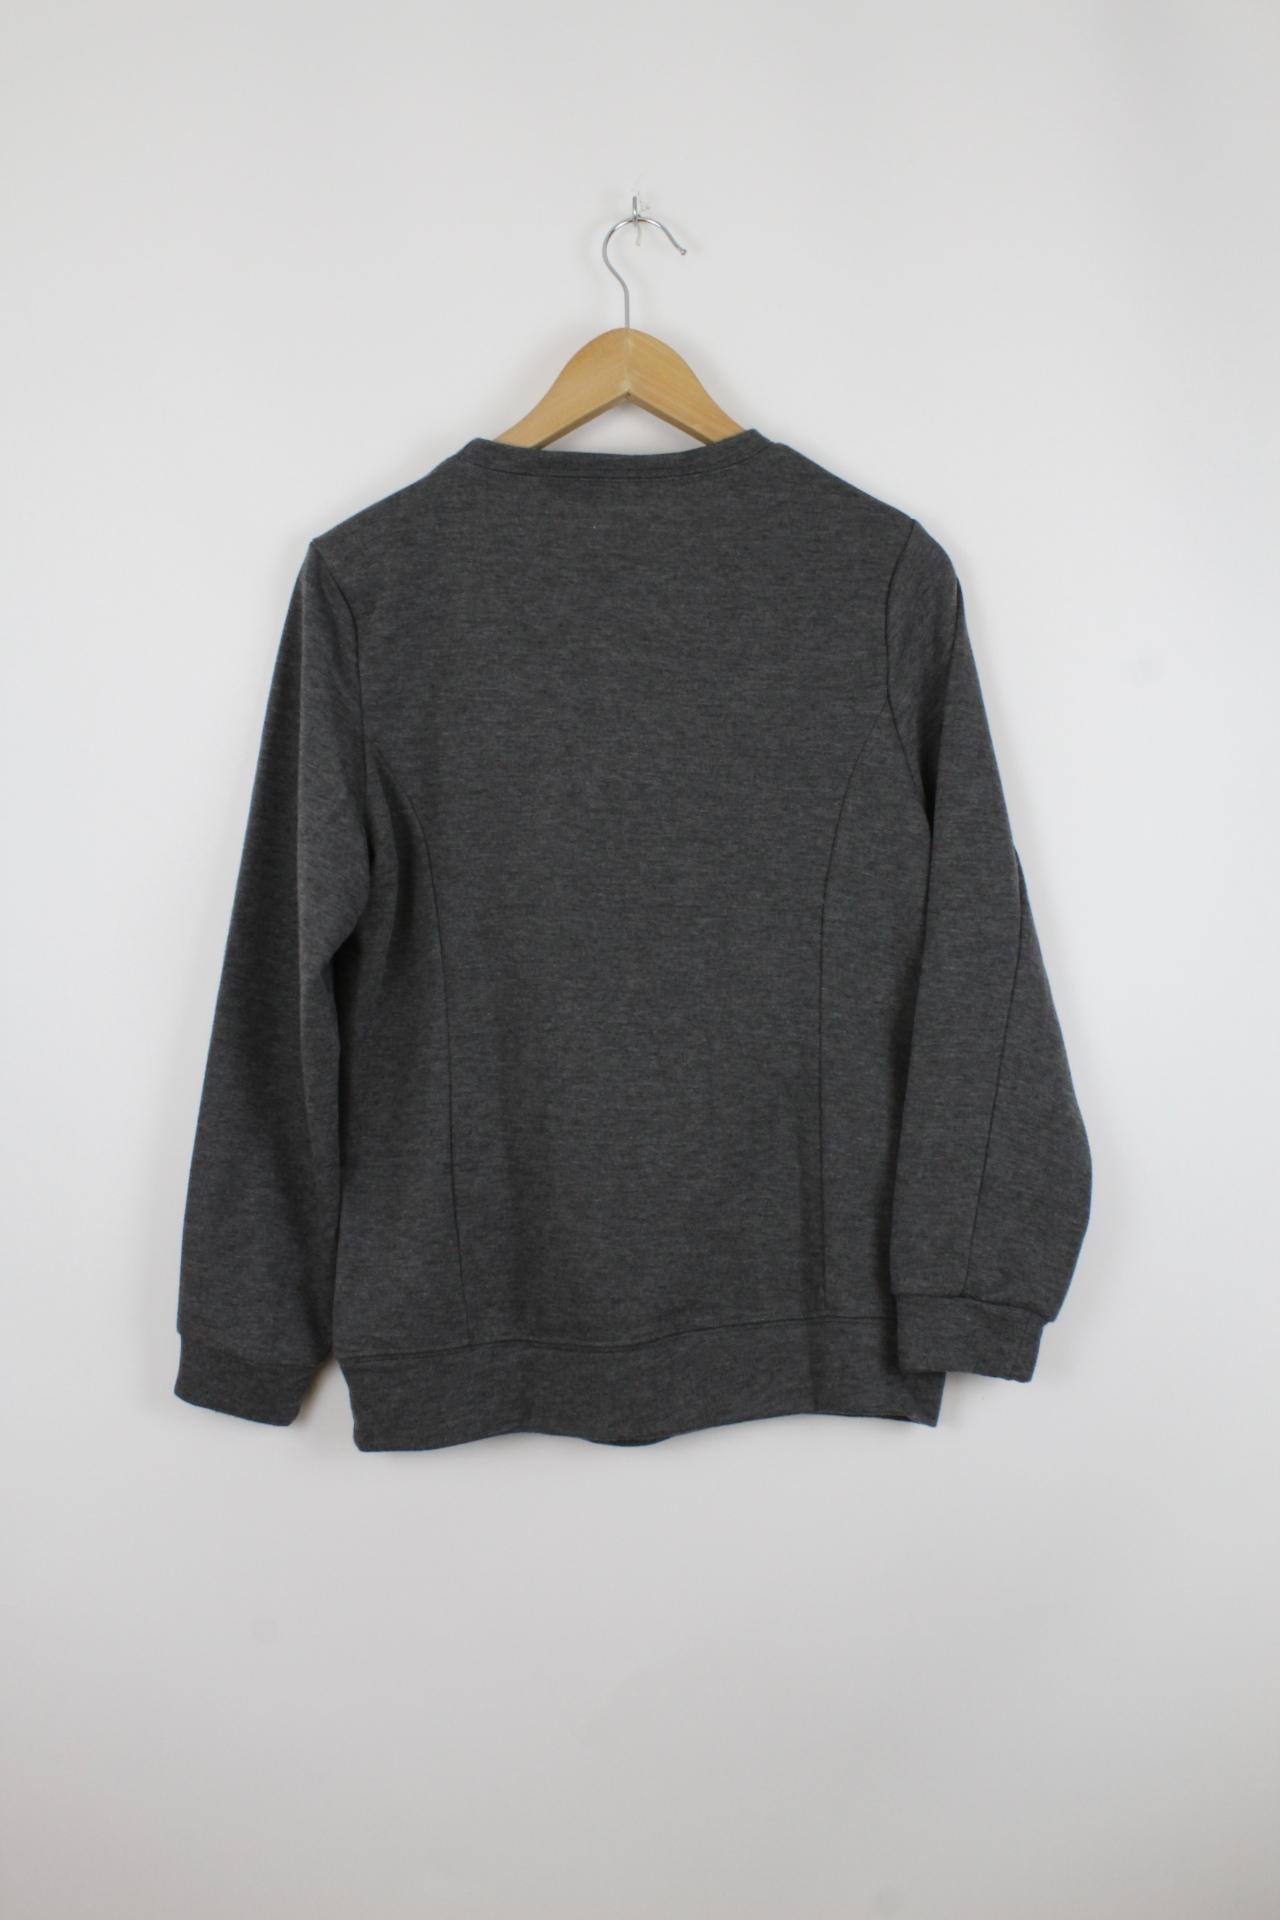 Vintage Sweater - M